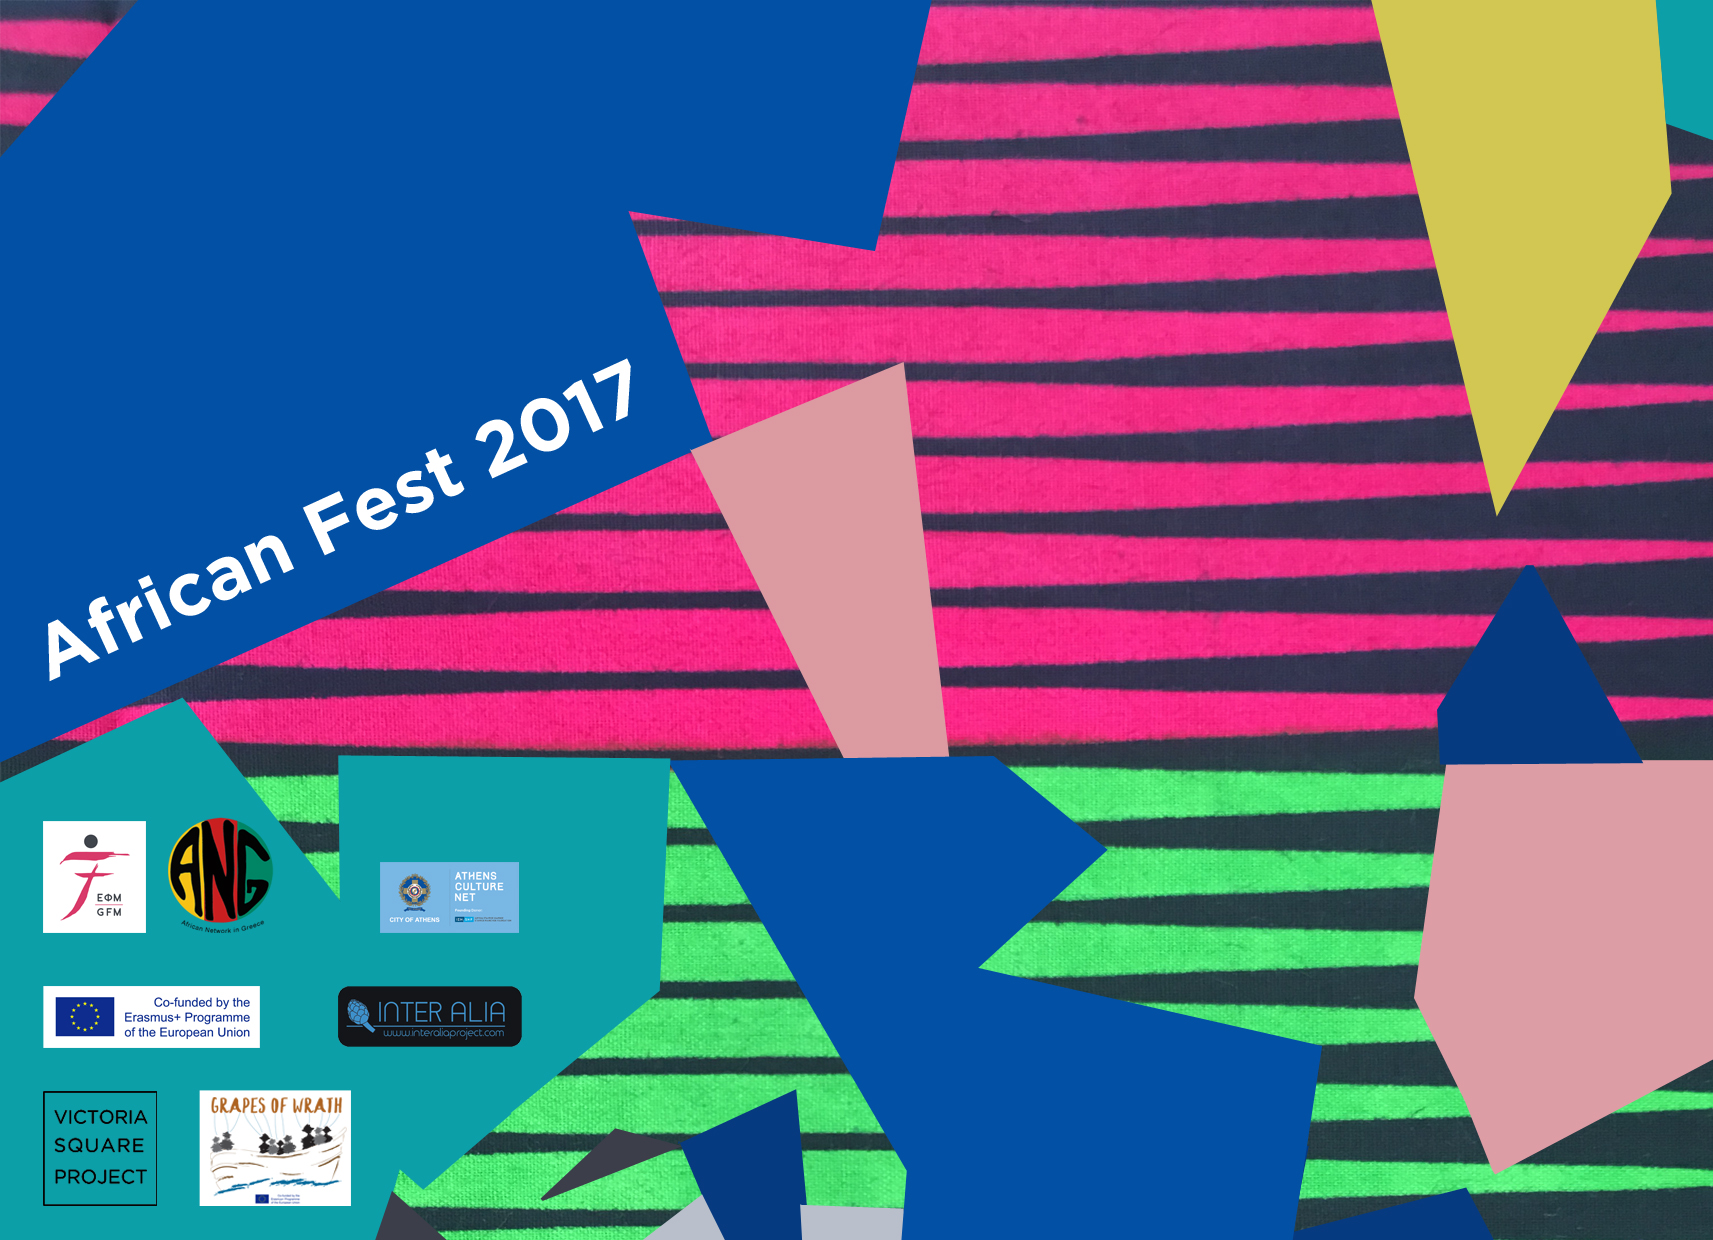 African Fest 2017